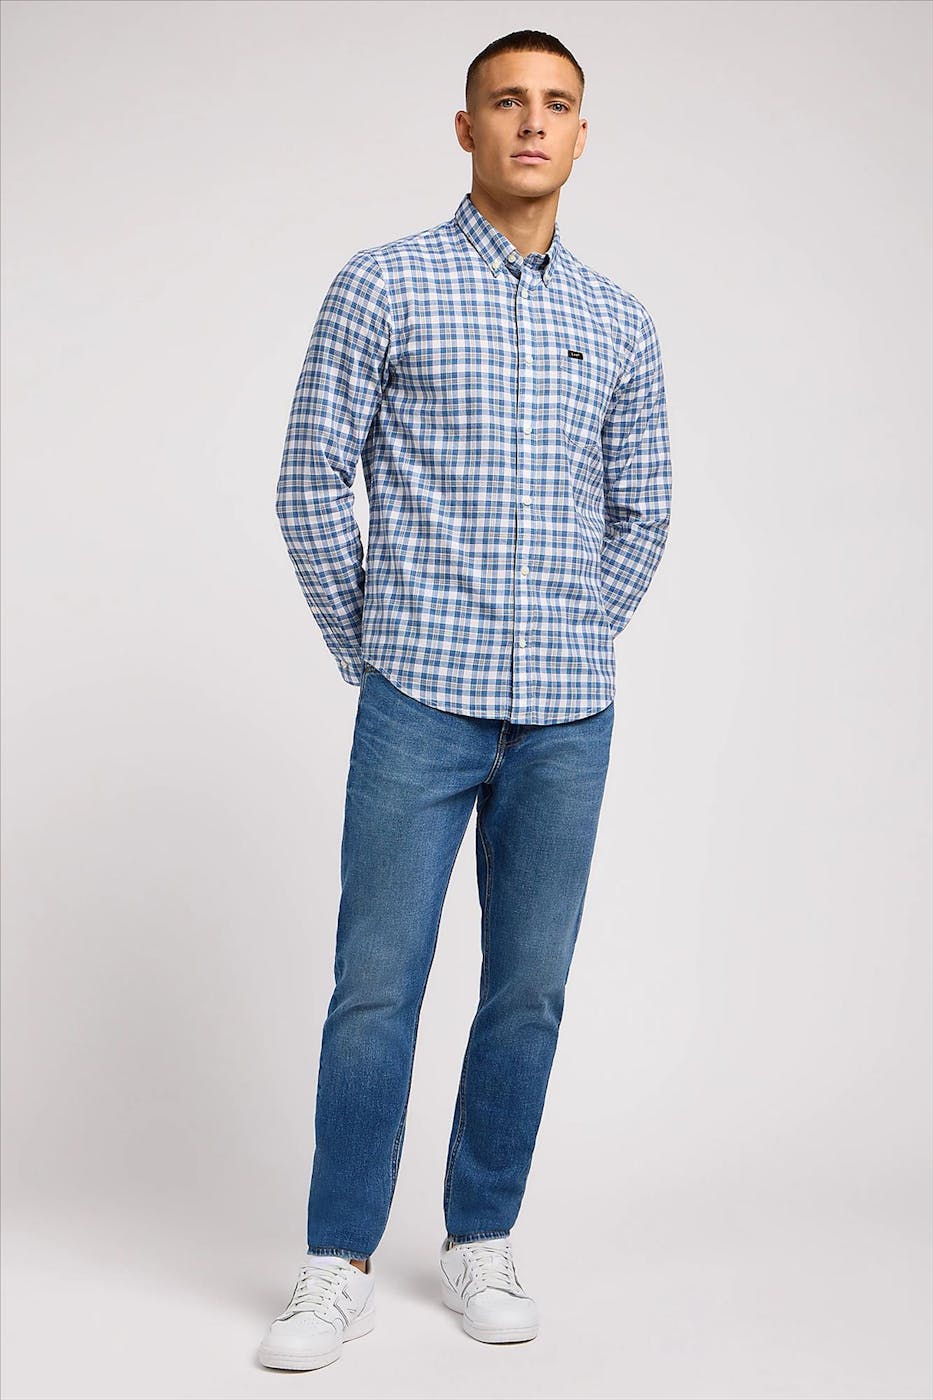 Lee - Middenblauwe Austin Regular Tapered jeans